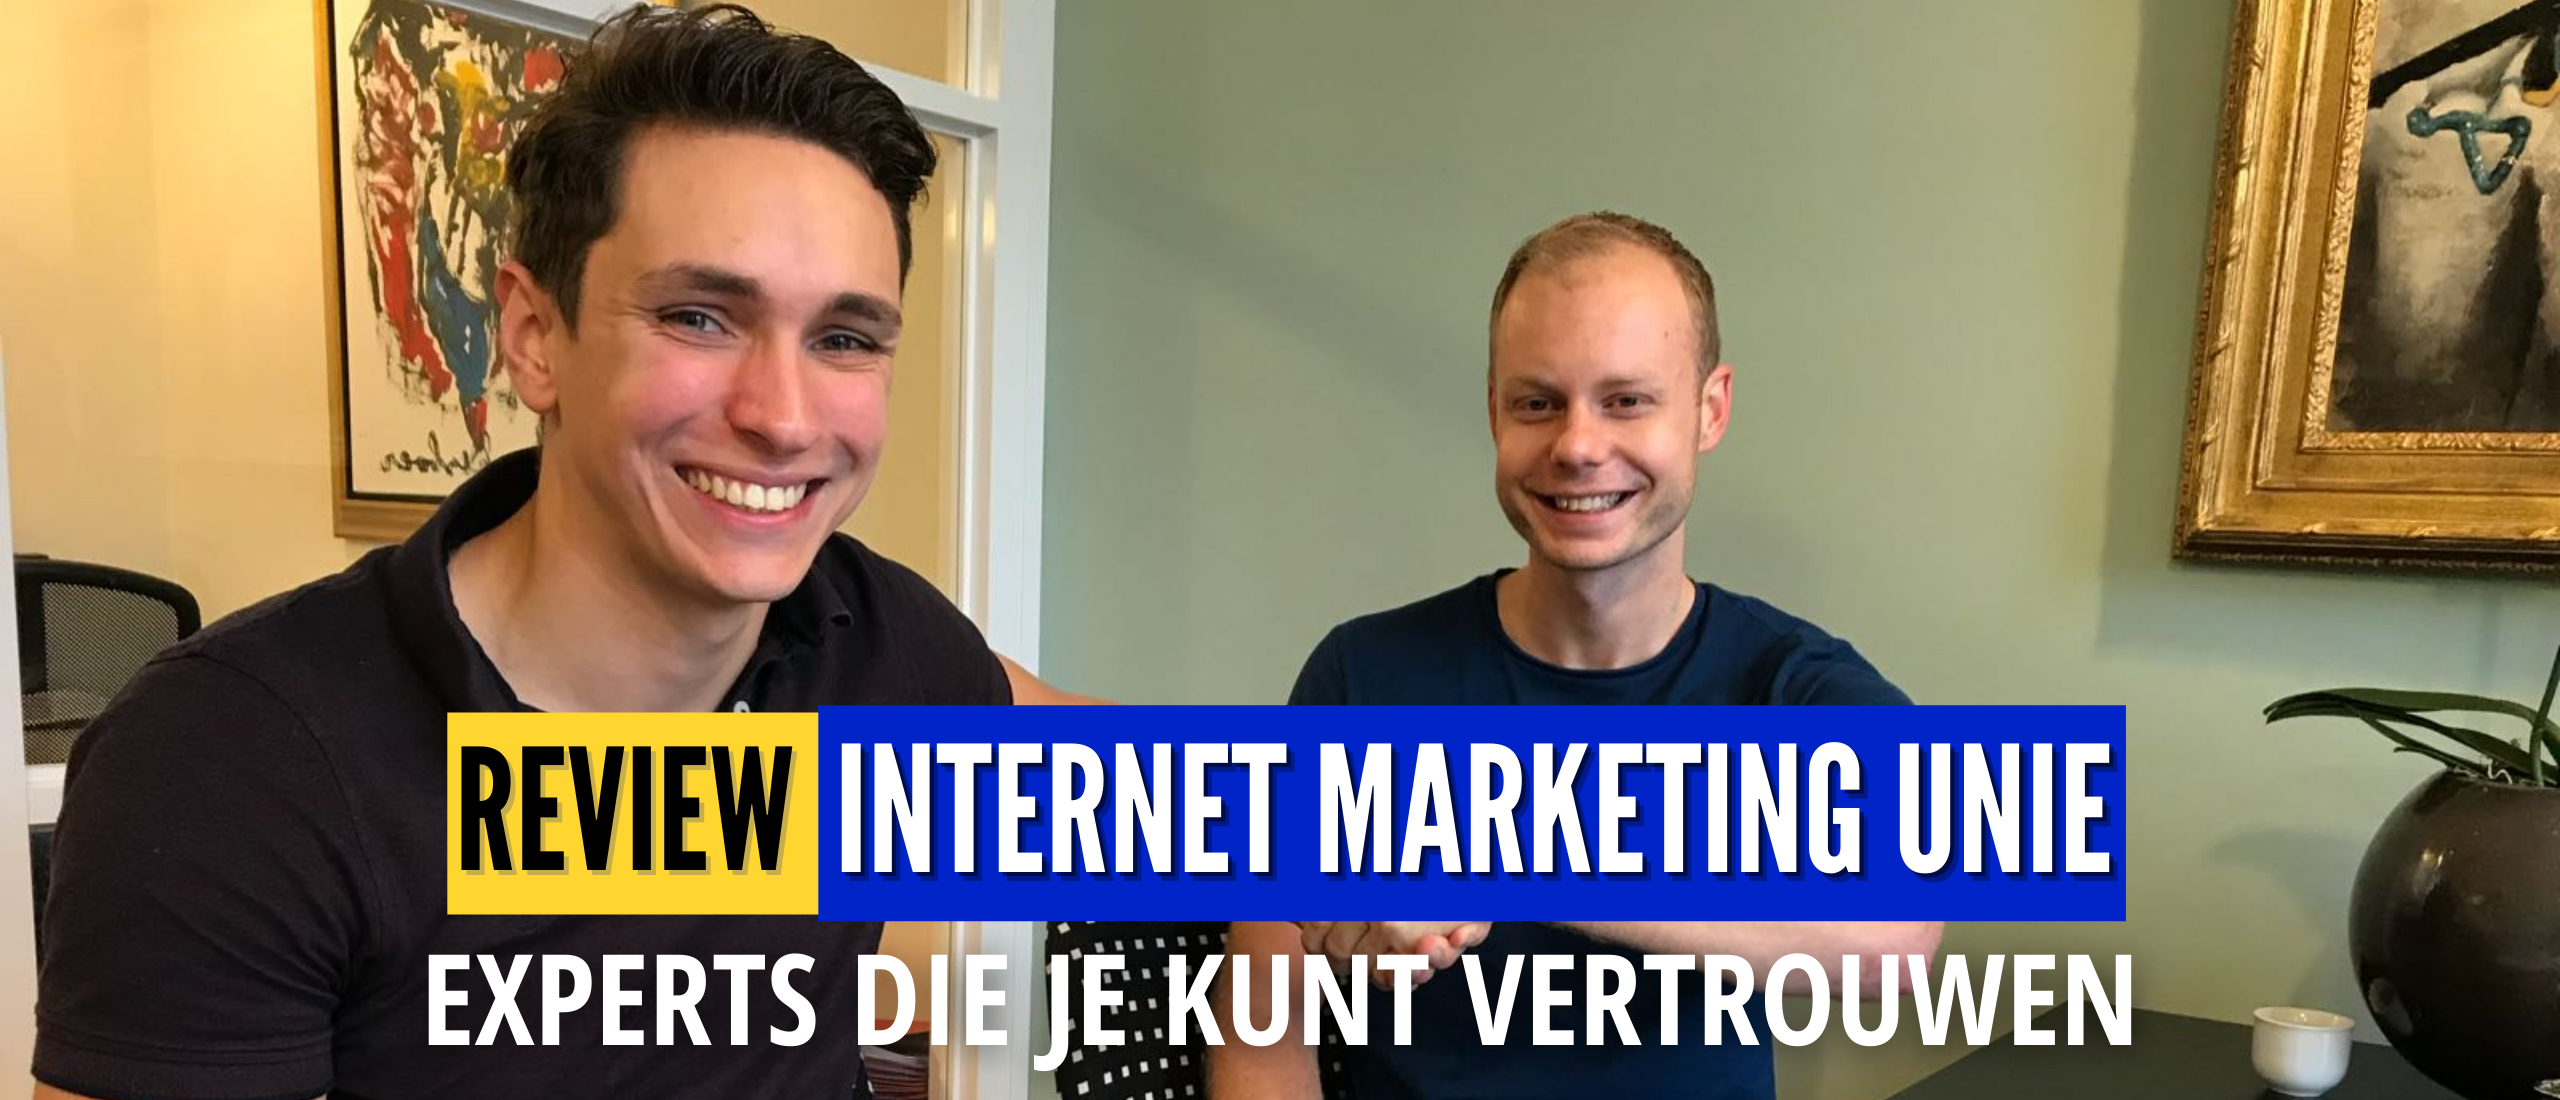 IMU Review - Internet Marketing Unie van Tonny & Martijn - Betrouwbaar Bedrijf?